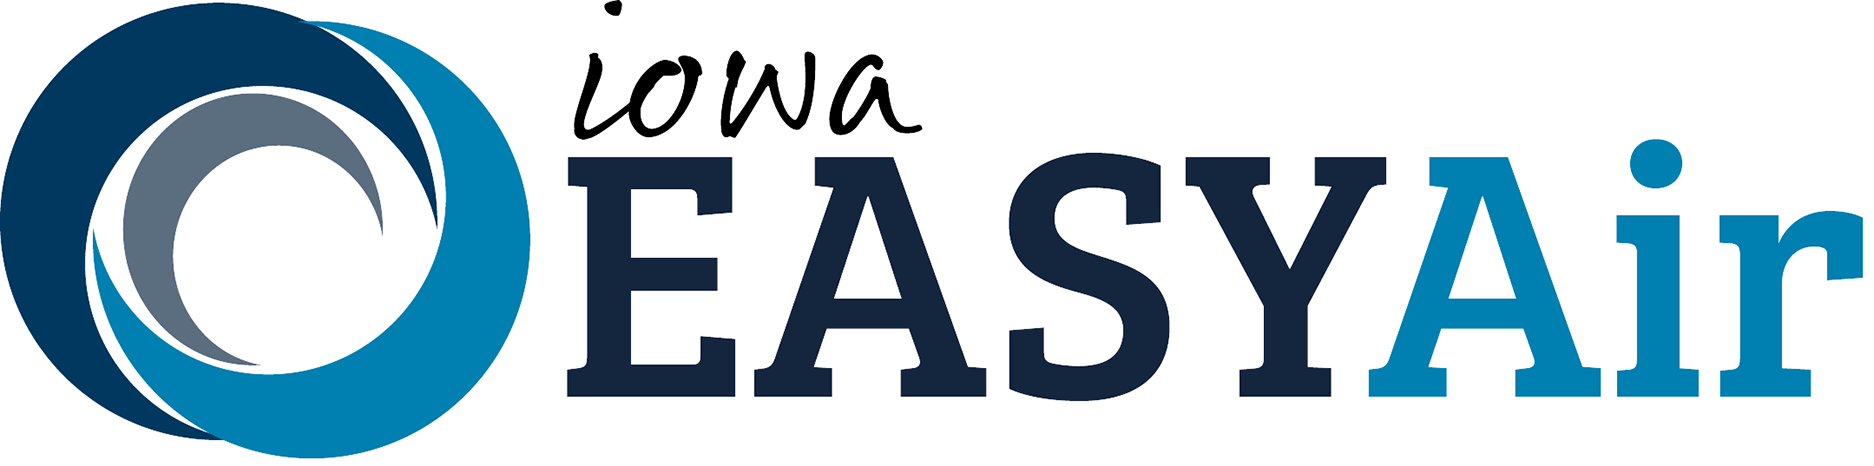 Iowa Easy Air program logo